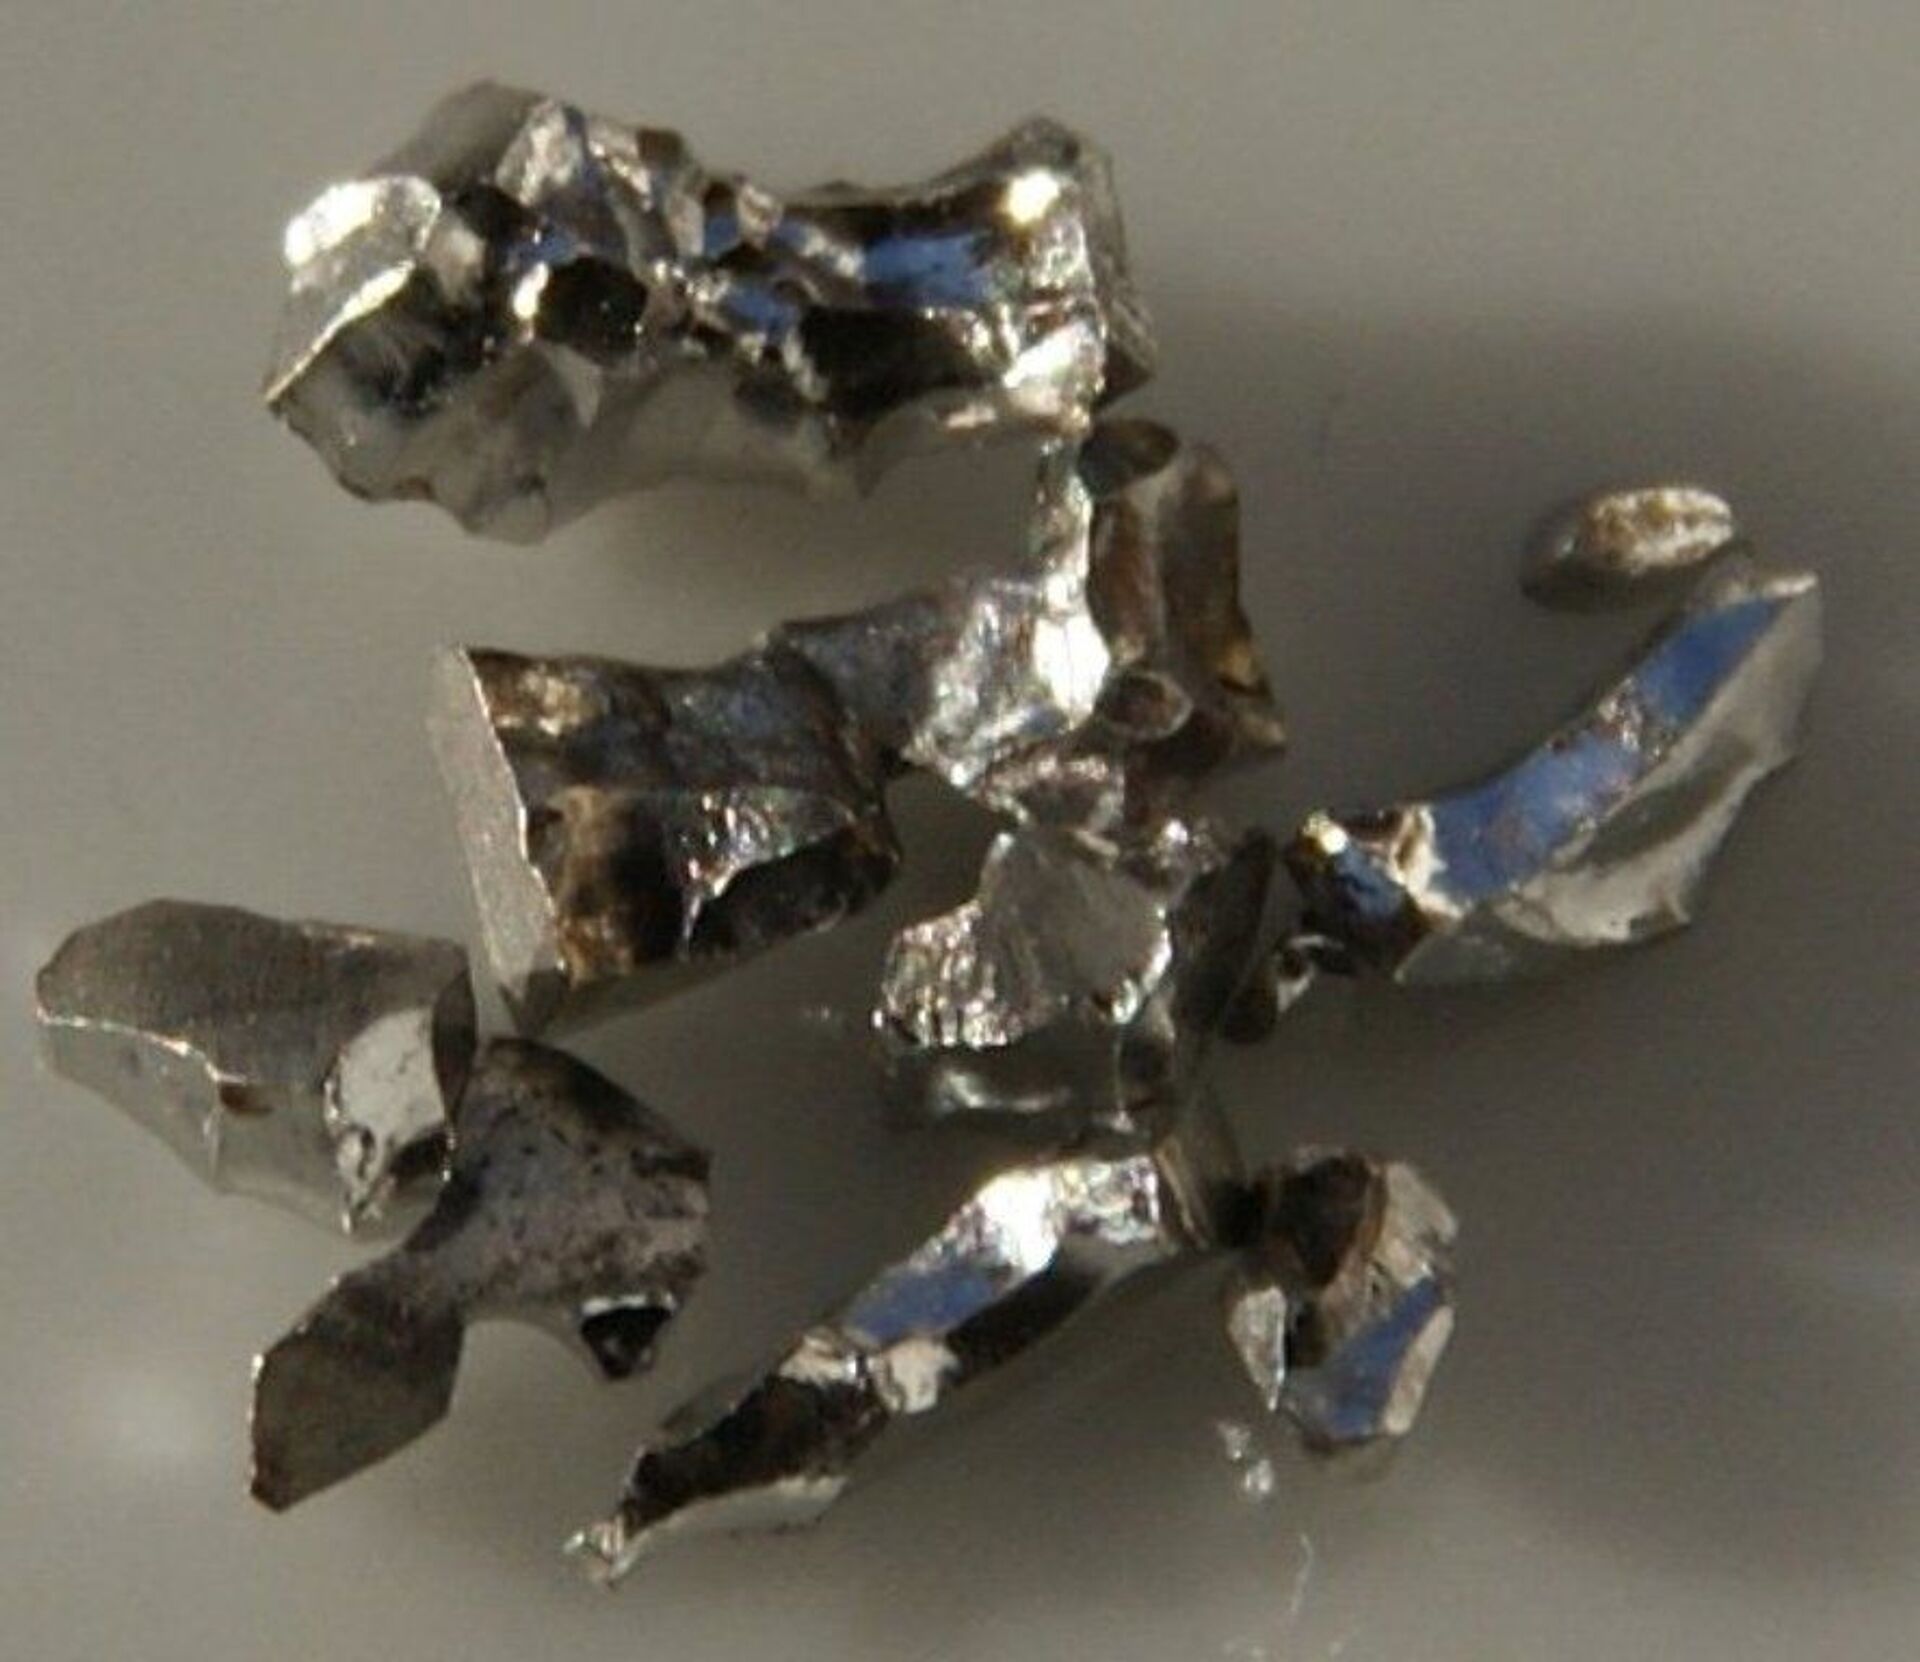 Иридијумска грозница: Србија би могла да експлоатише племенит метал чија цена скаче баснословно - Sputnik Србија, 1920, 30.03.2021